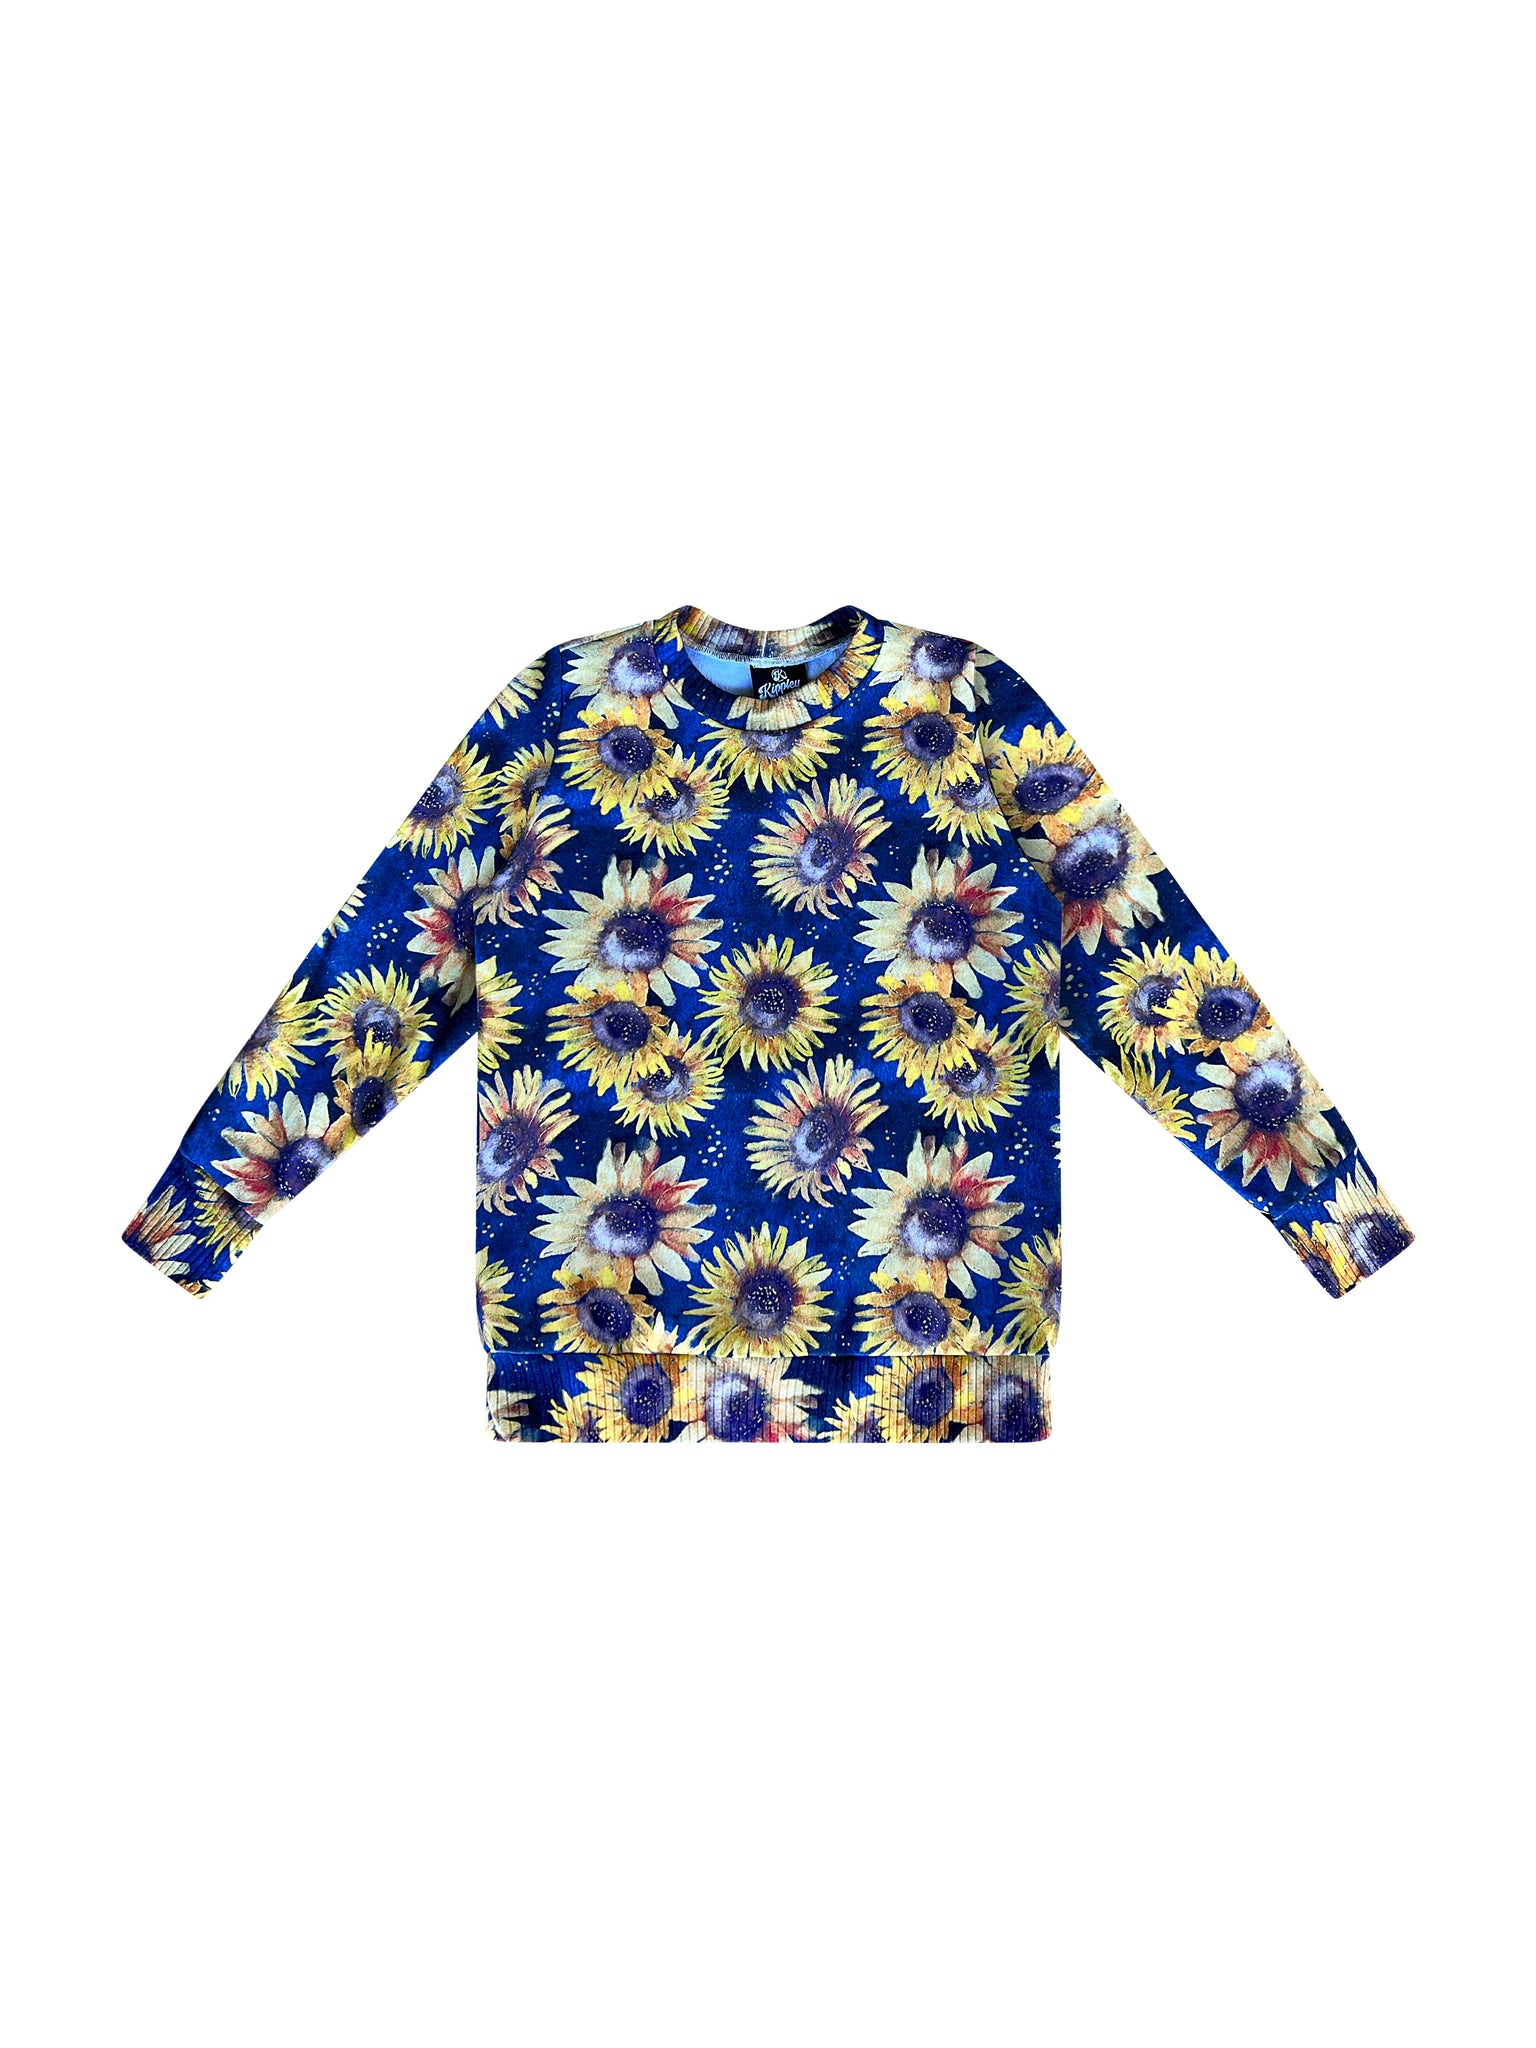 Kids Sweatshirt in 'Sunflowers'